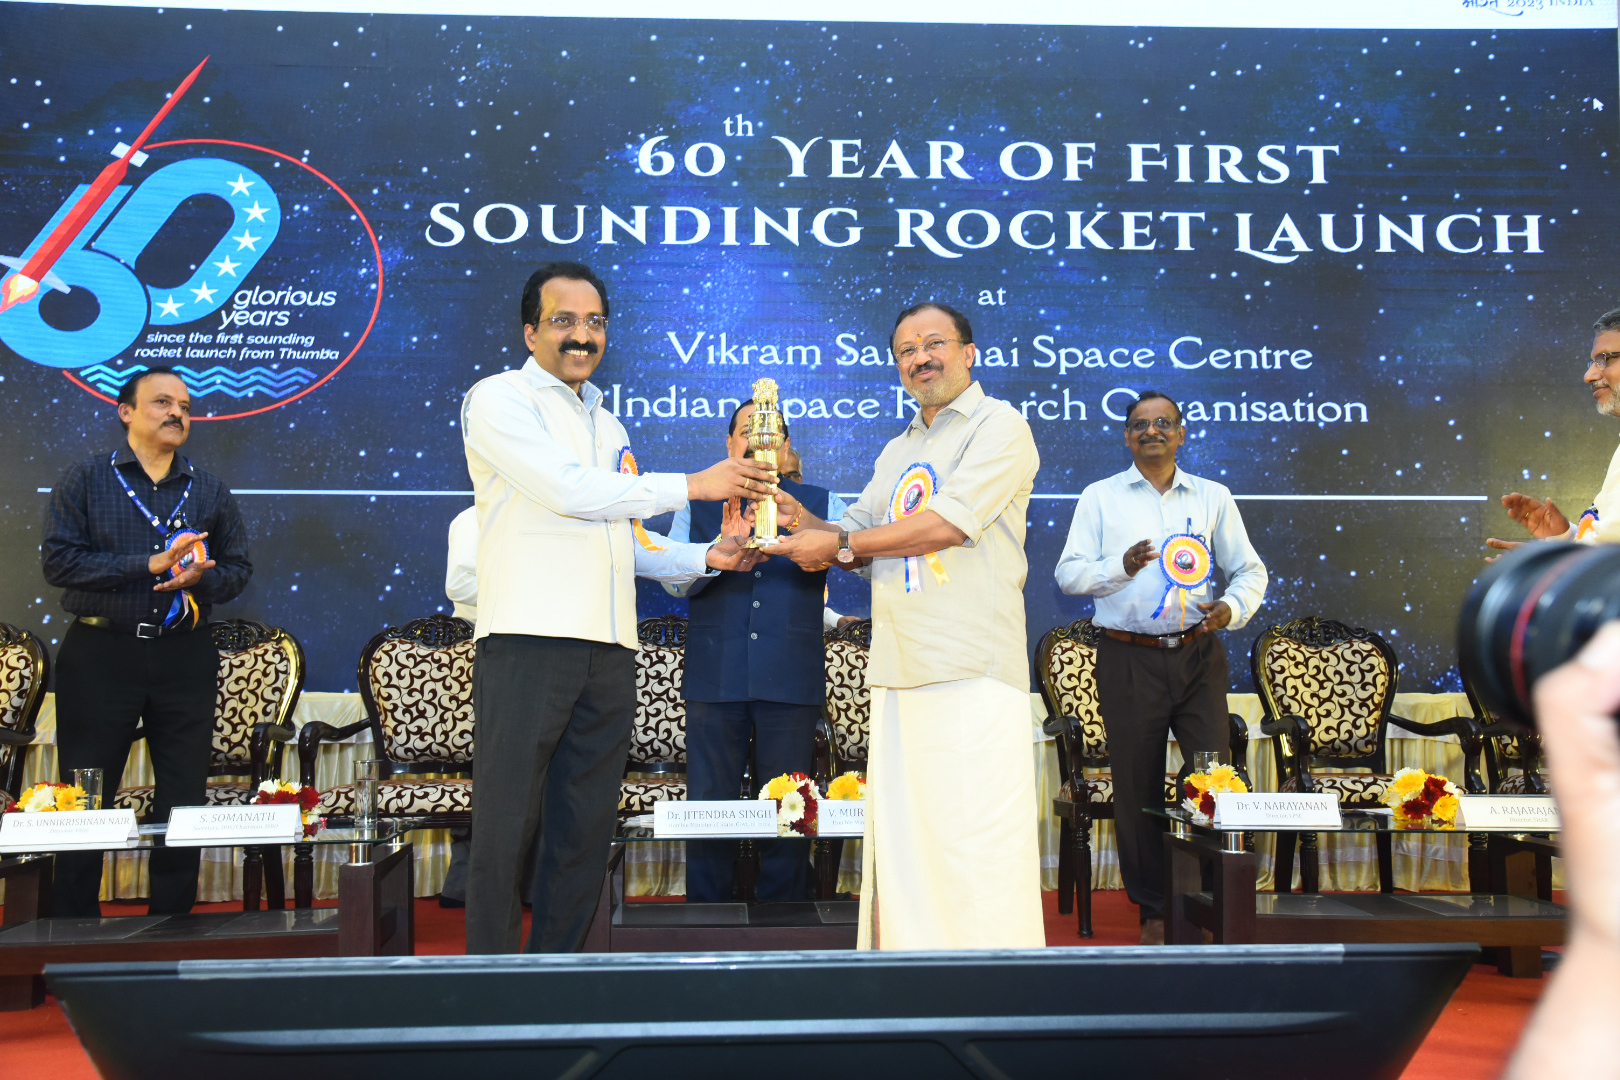 ISRO celebrates diamond jubilee of first sounding rocket launch